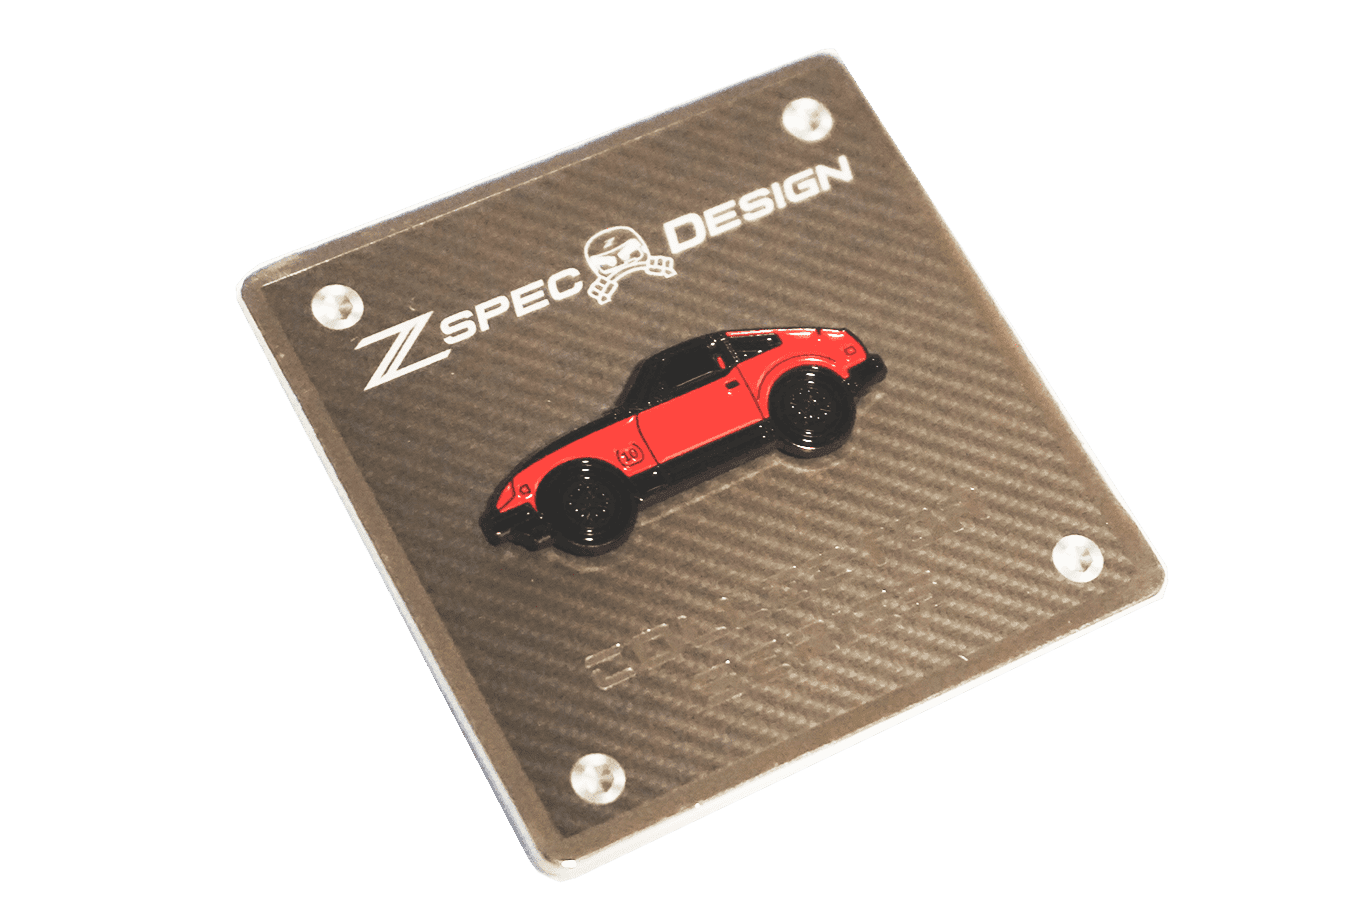 ZSPEC Datsun 280zx S130 Anniversary Edition Lapel / Hat Pin